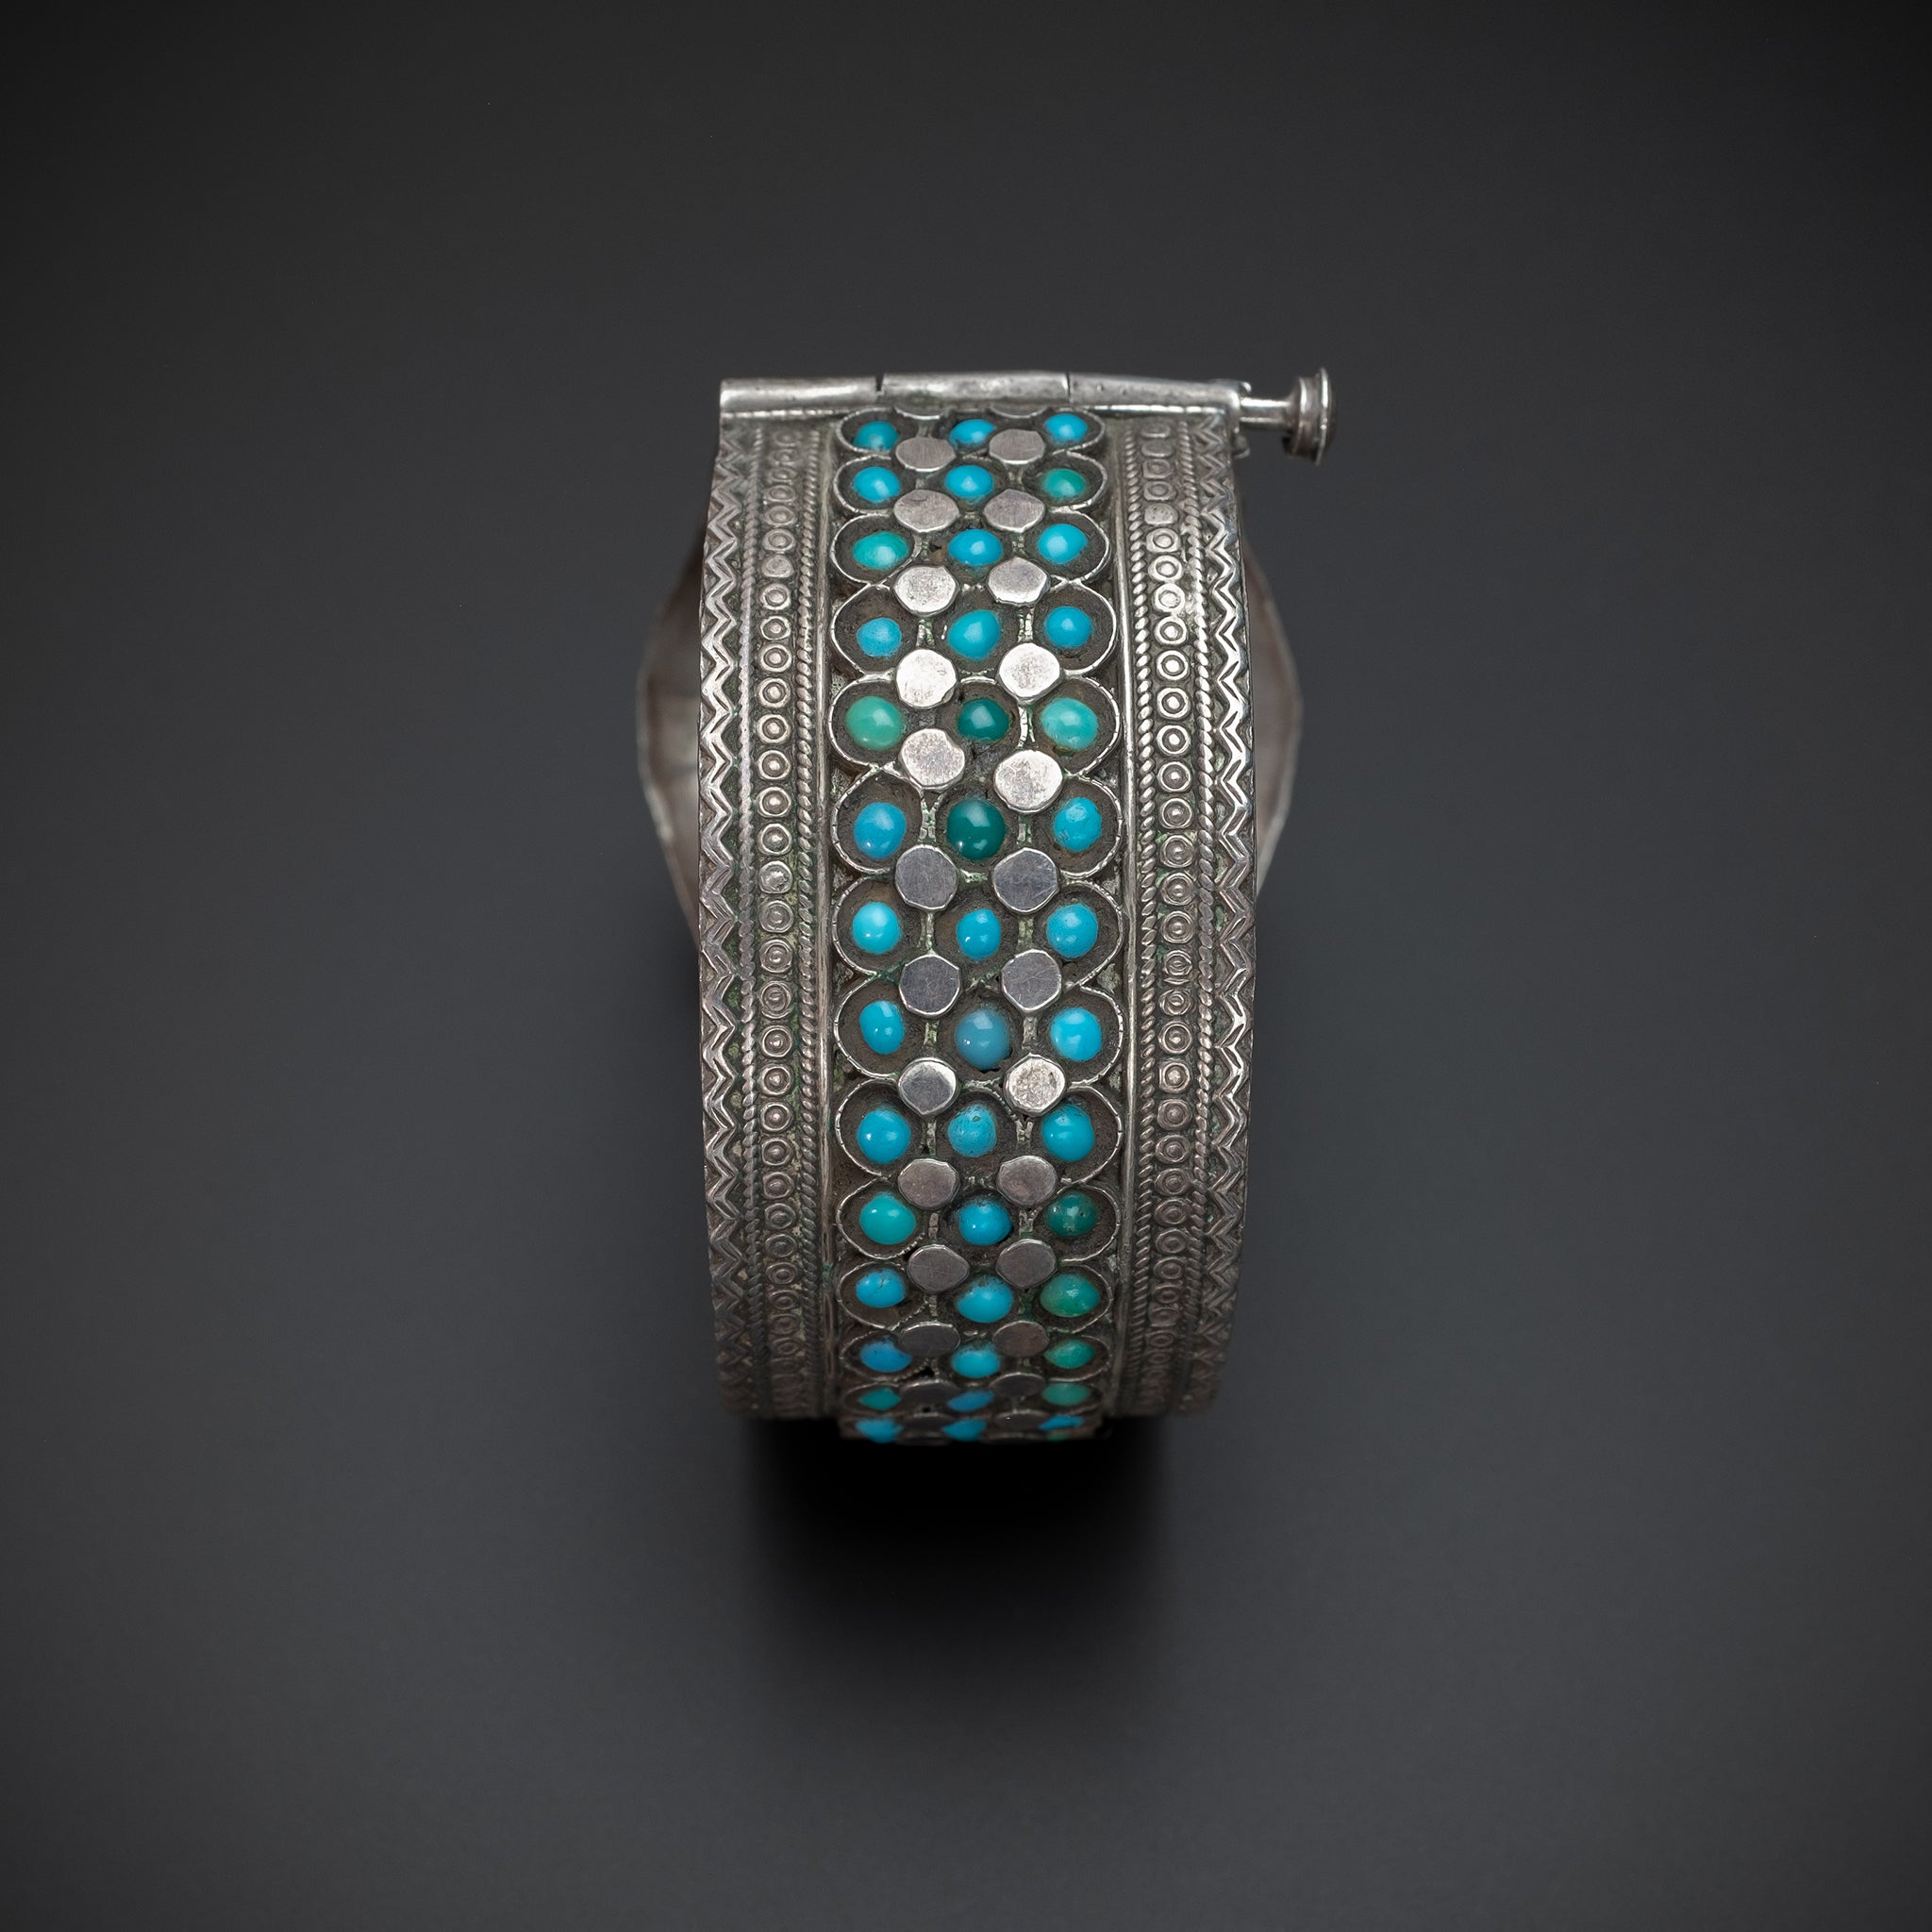 Antique Silver Hinged Bracelet, Bukhara, Uzbekistan